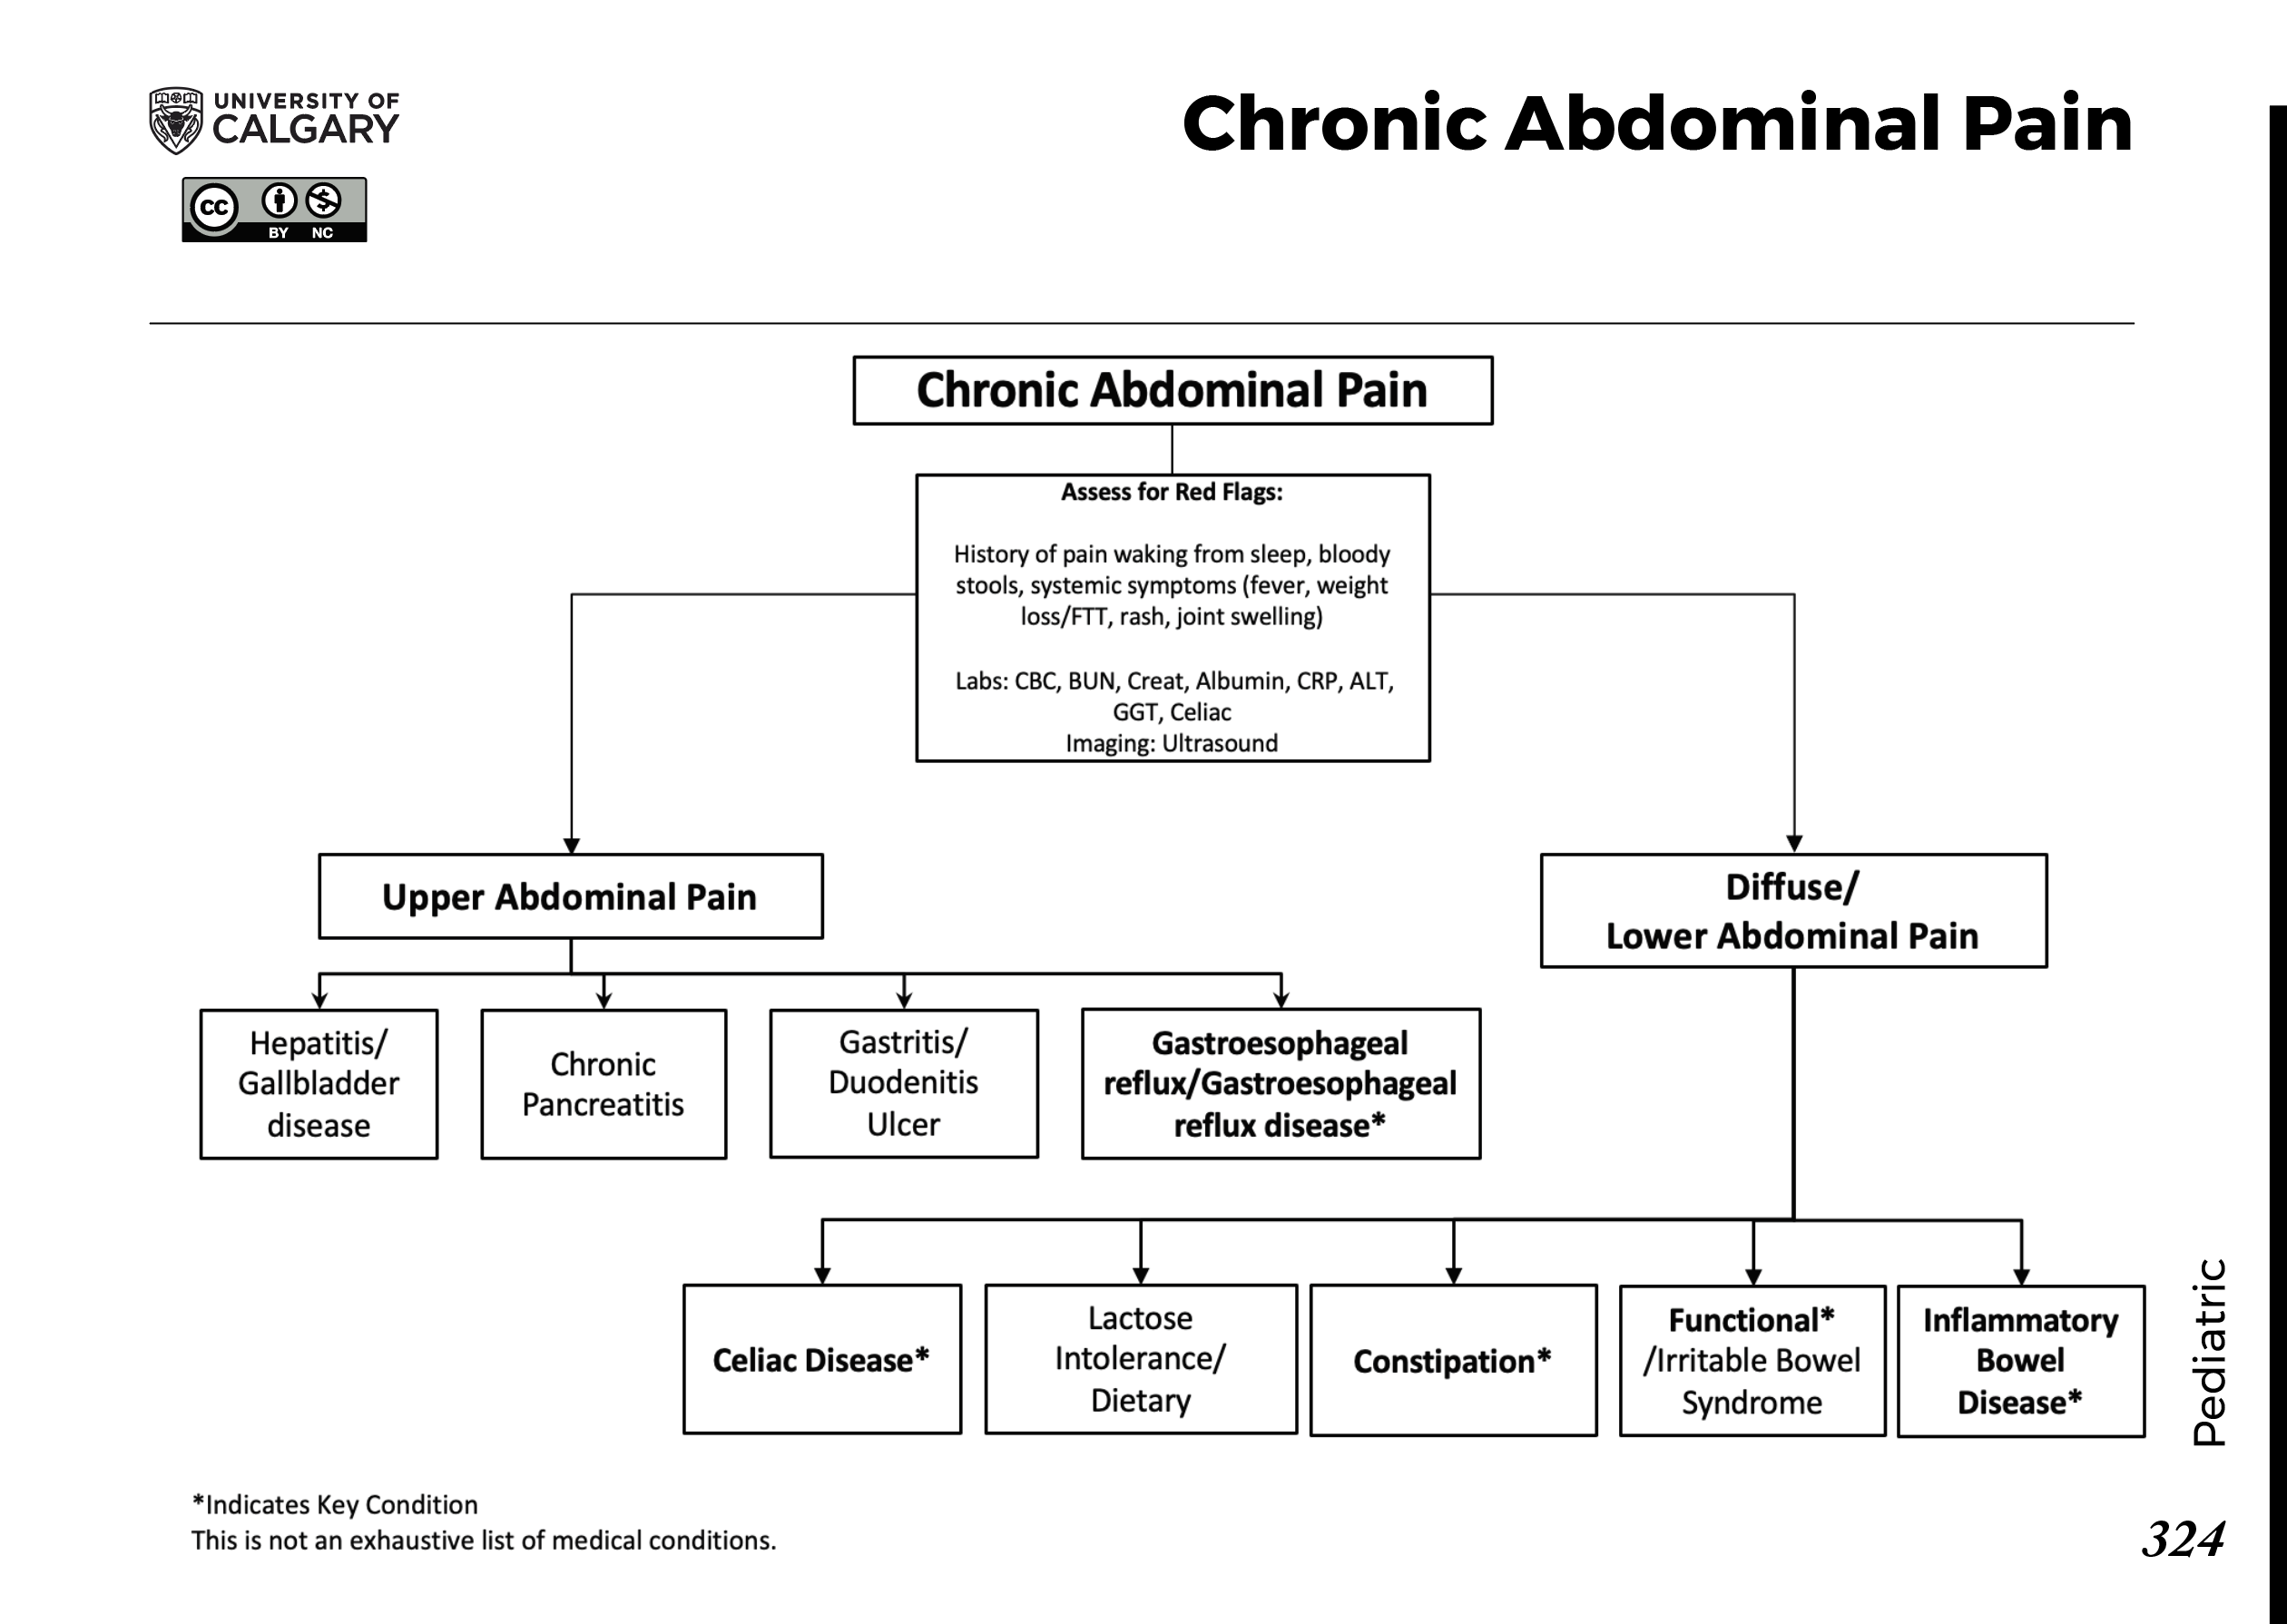 CHRONIC ABDOMINAL PAIN Scheme